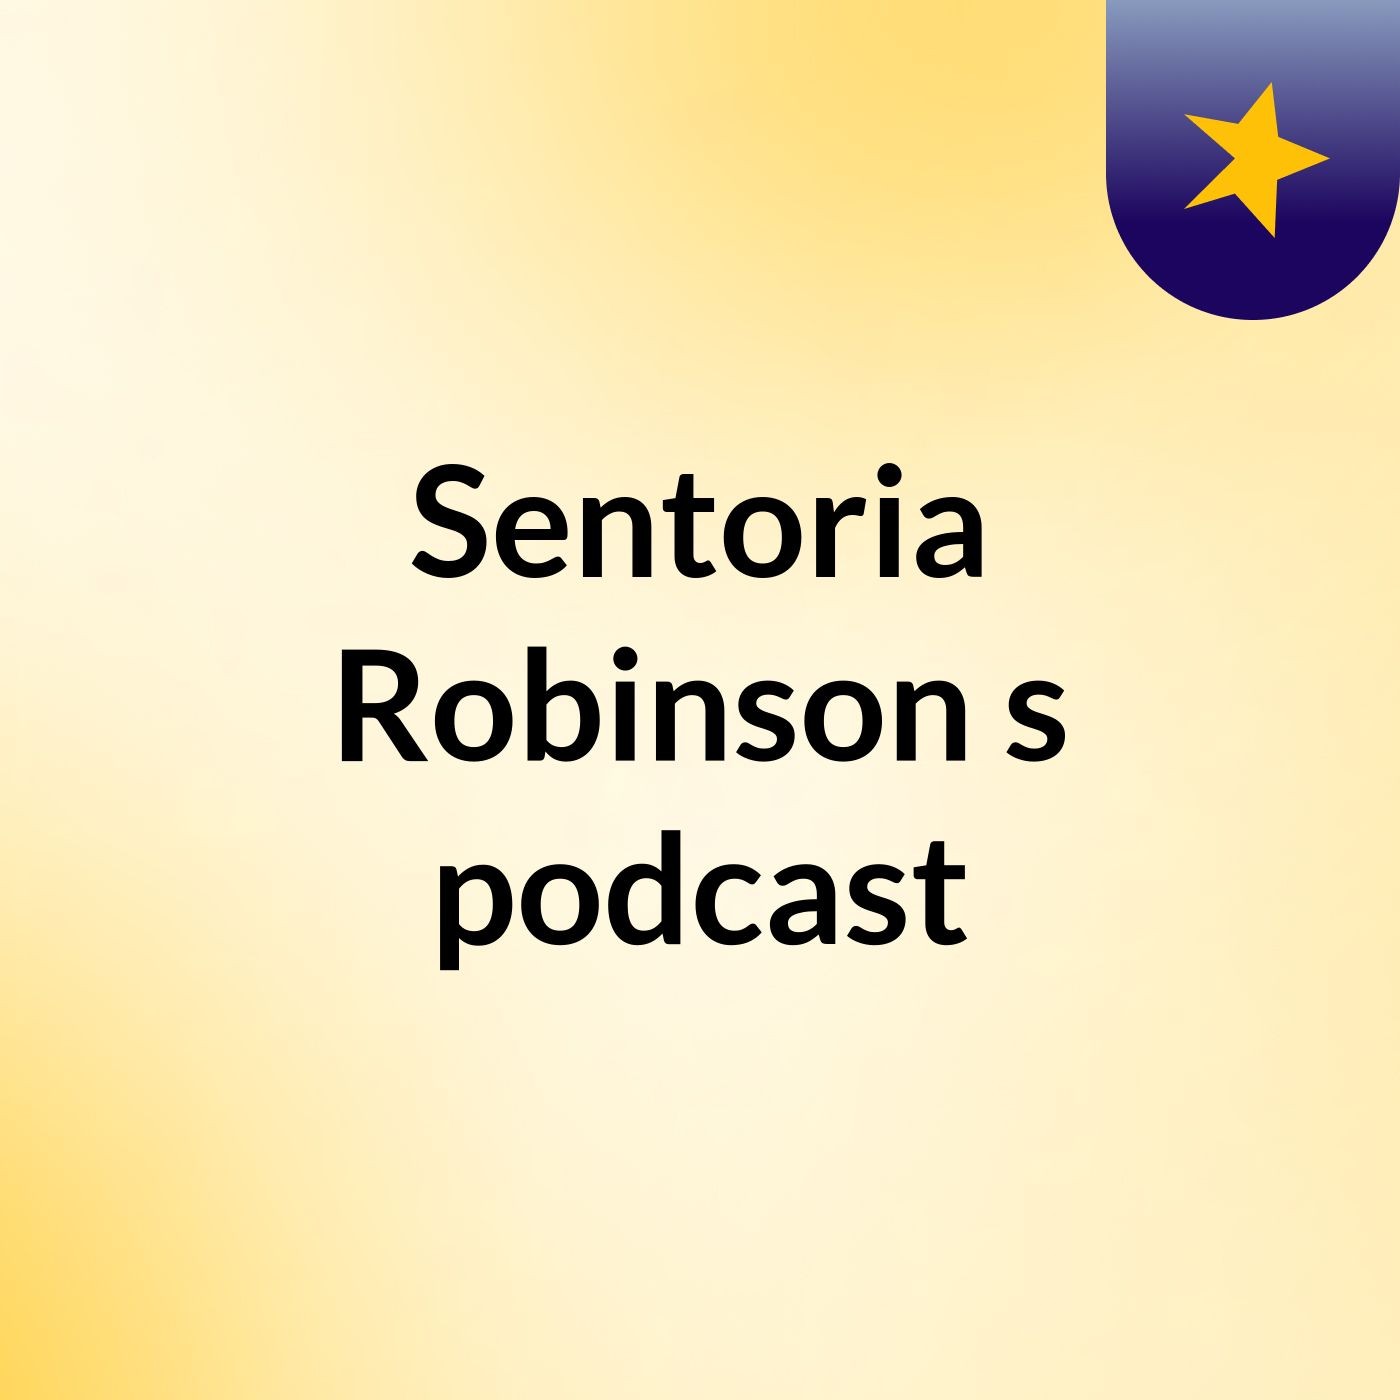 Episode 3 - Sentoria Robinson's podcast